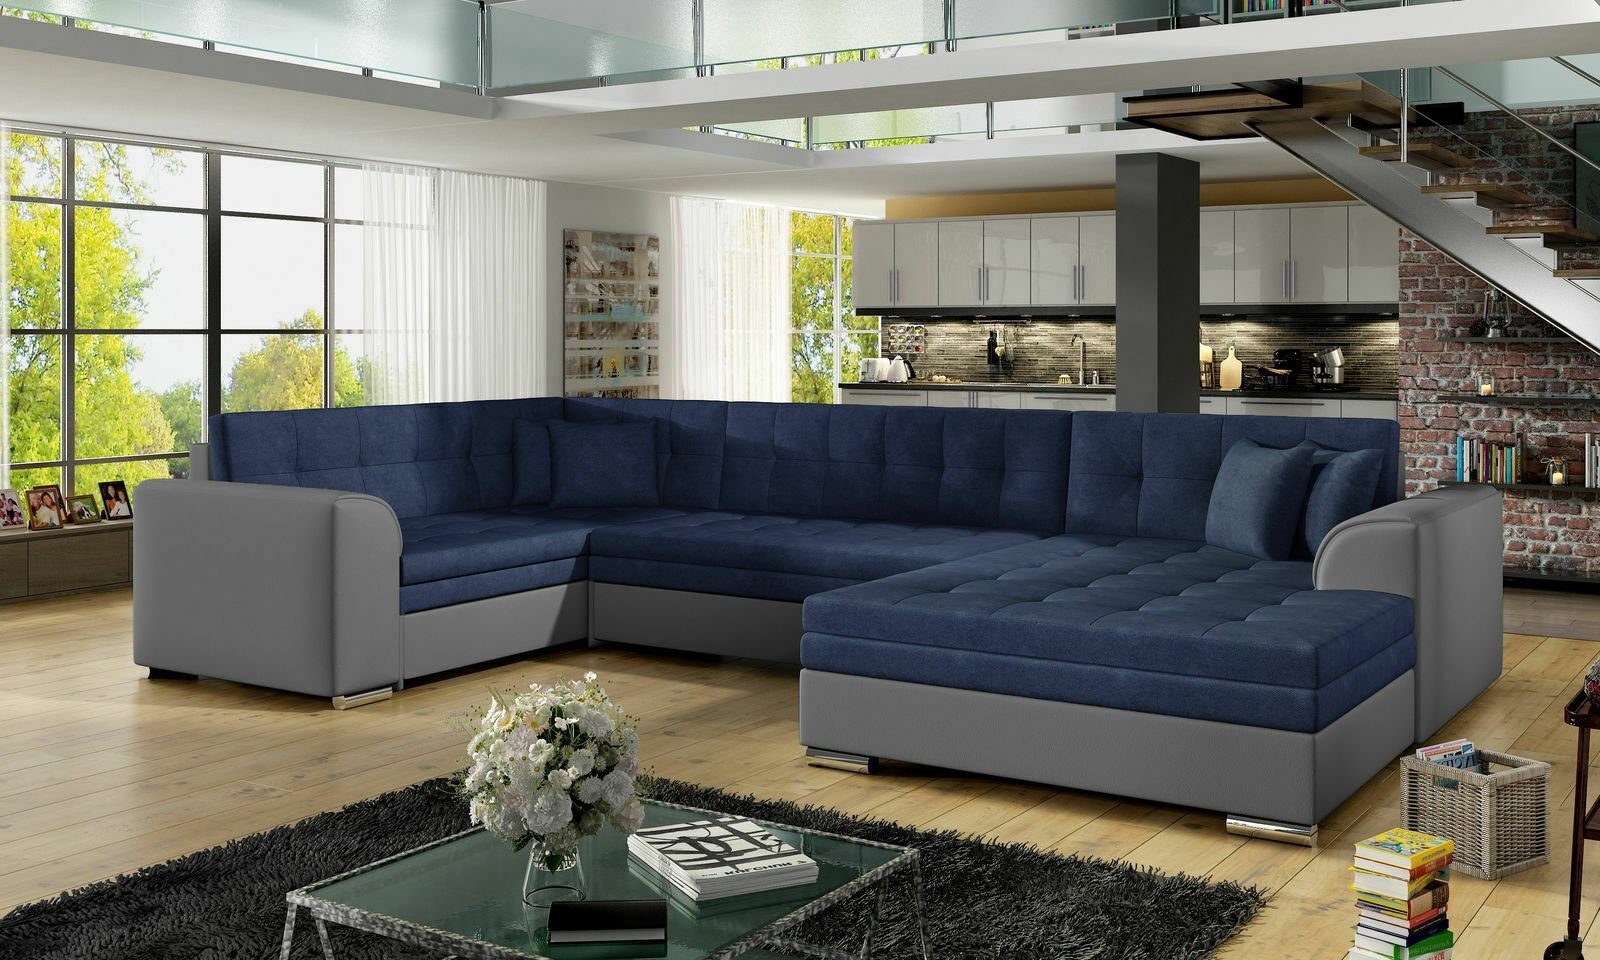 JVmoebel Ecksofa Design Ecksofa Schlafsofa Bettfunktion Couch Leder Textil Polster, Mit Bettfunktion Blau/Grau